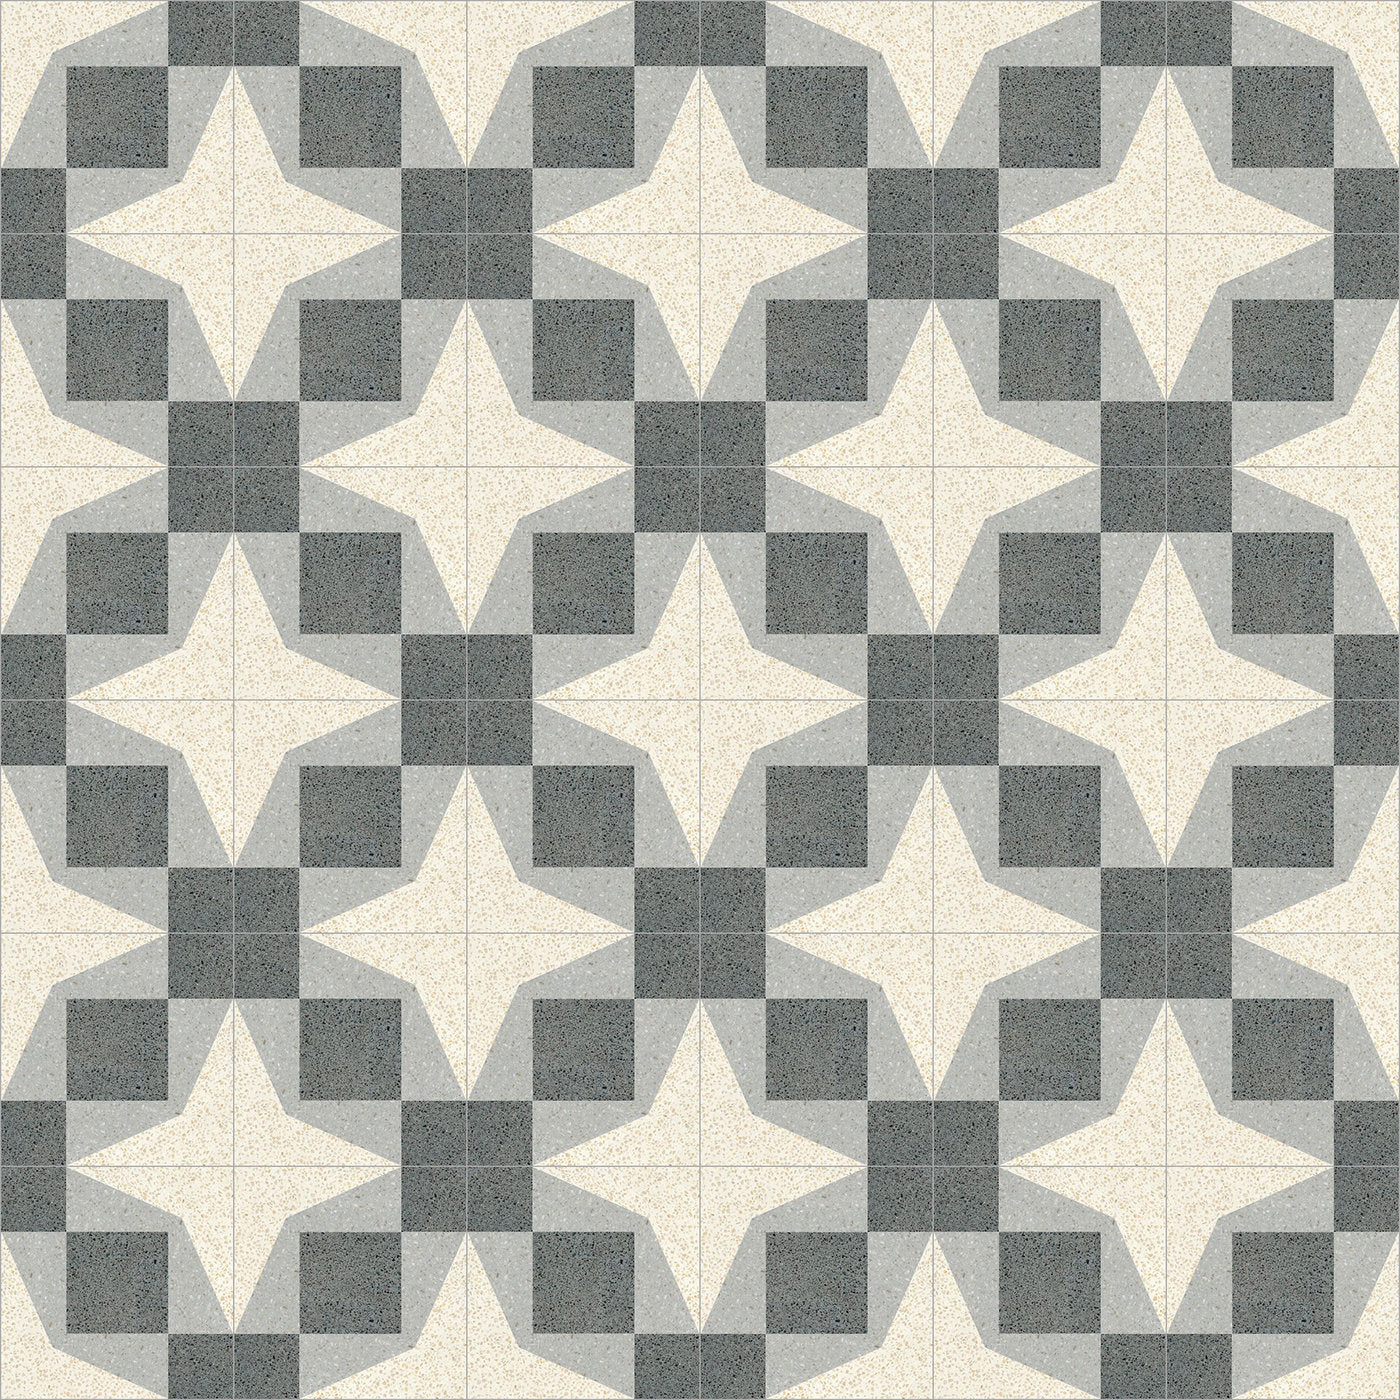 Cassiopea Set of 25 Terrazzo Tiles - Alternative view 1